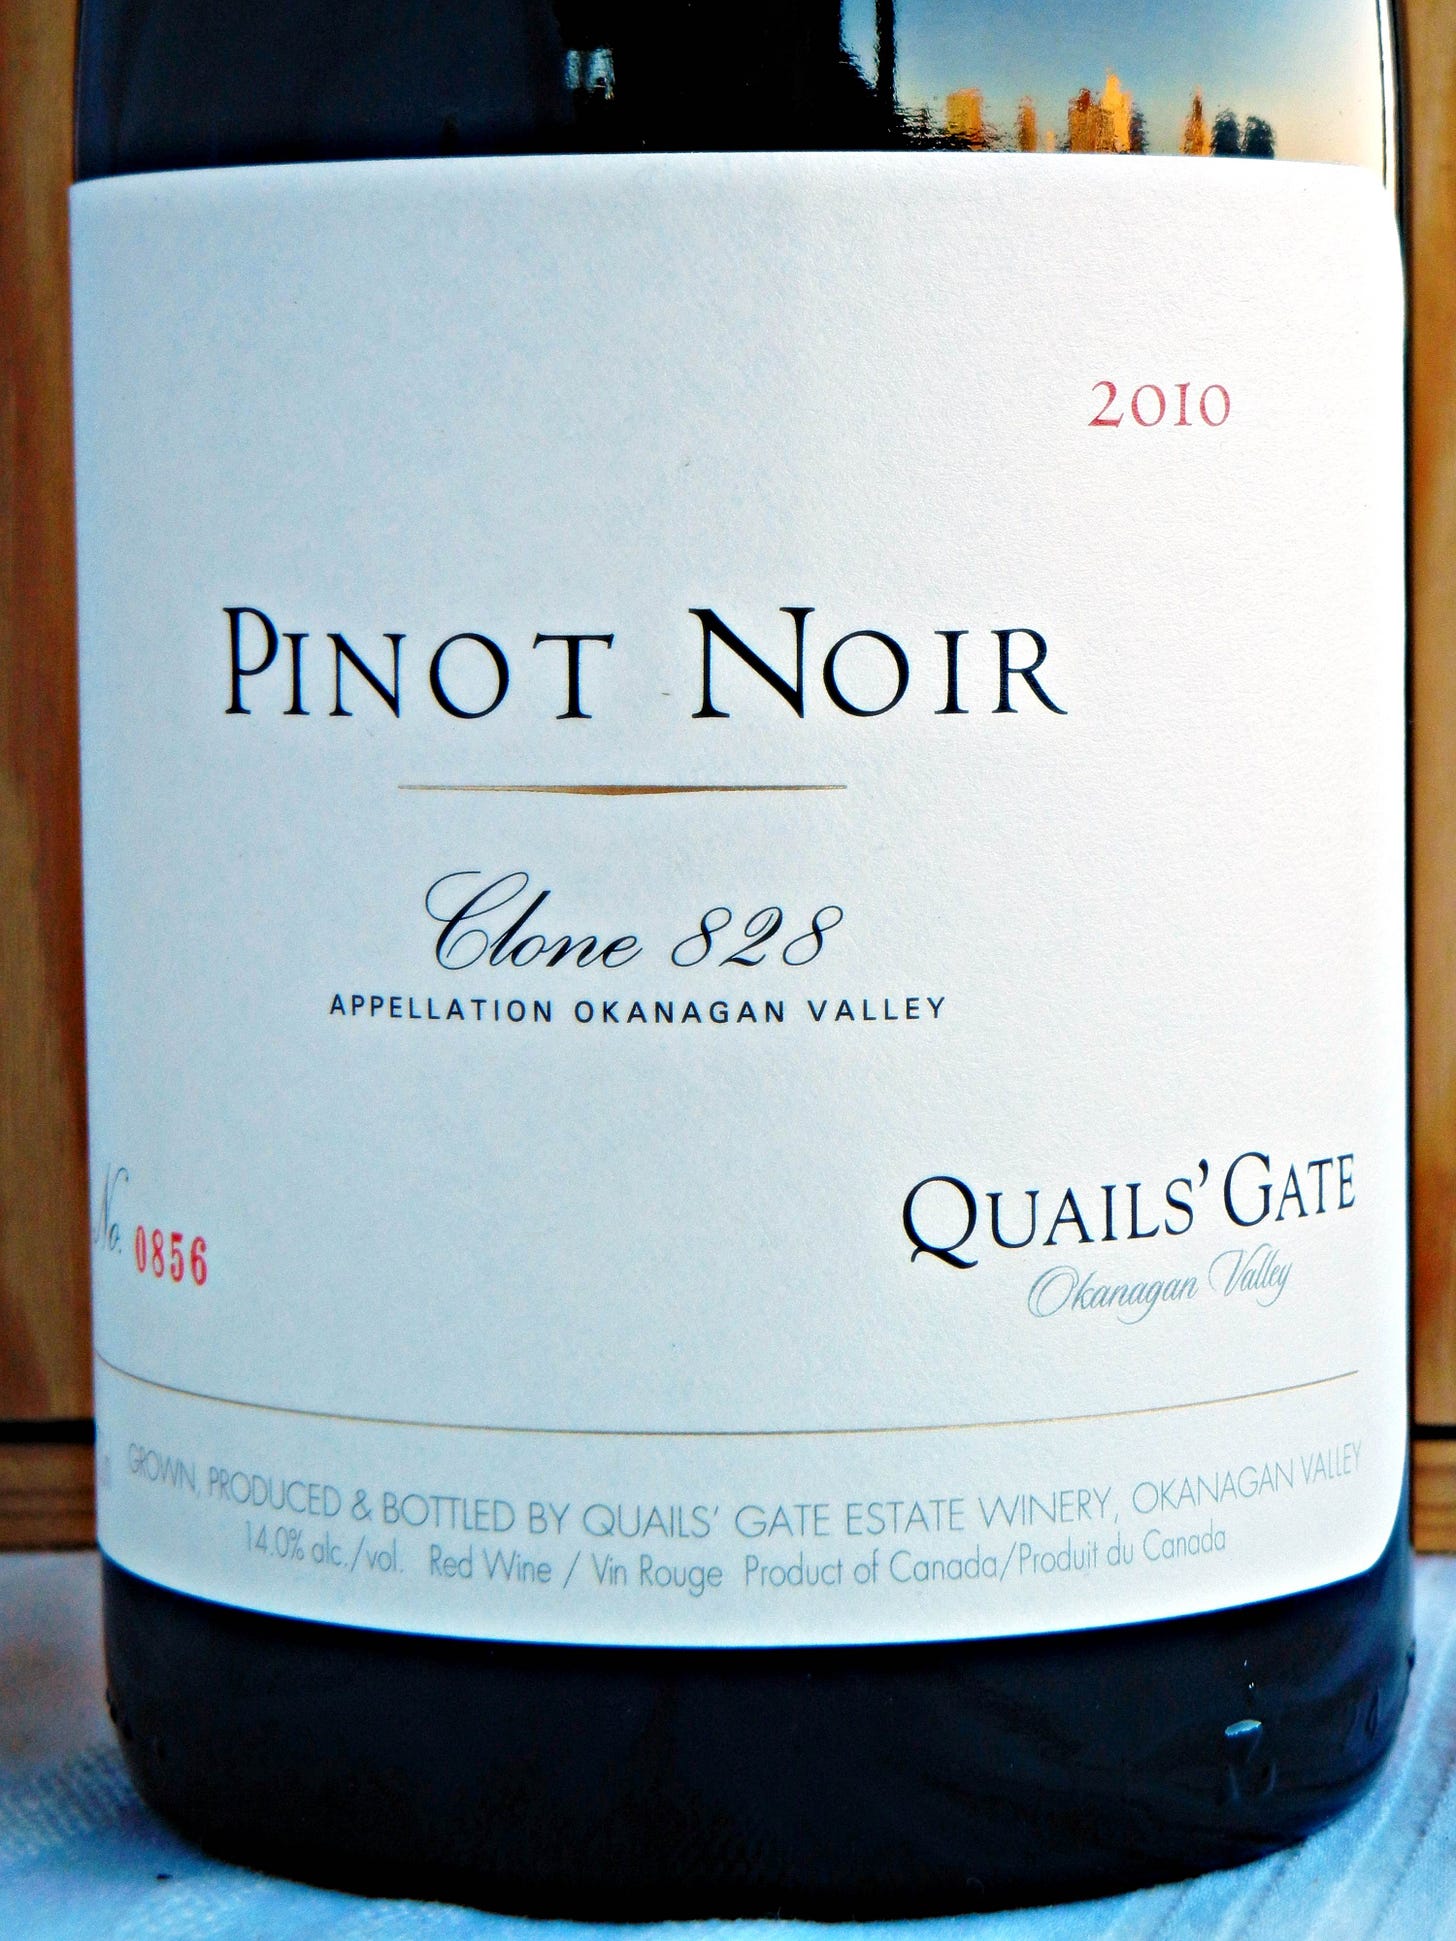 Quails' Gate Clone 828 Pinot Noir 2010 Label - BC Pinot Noir Tasting Review 10